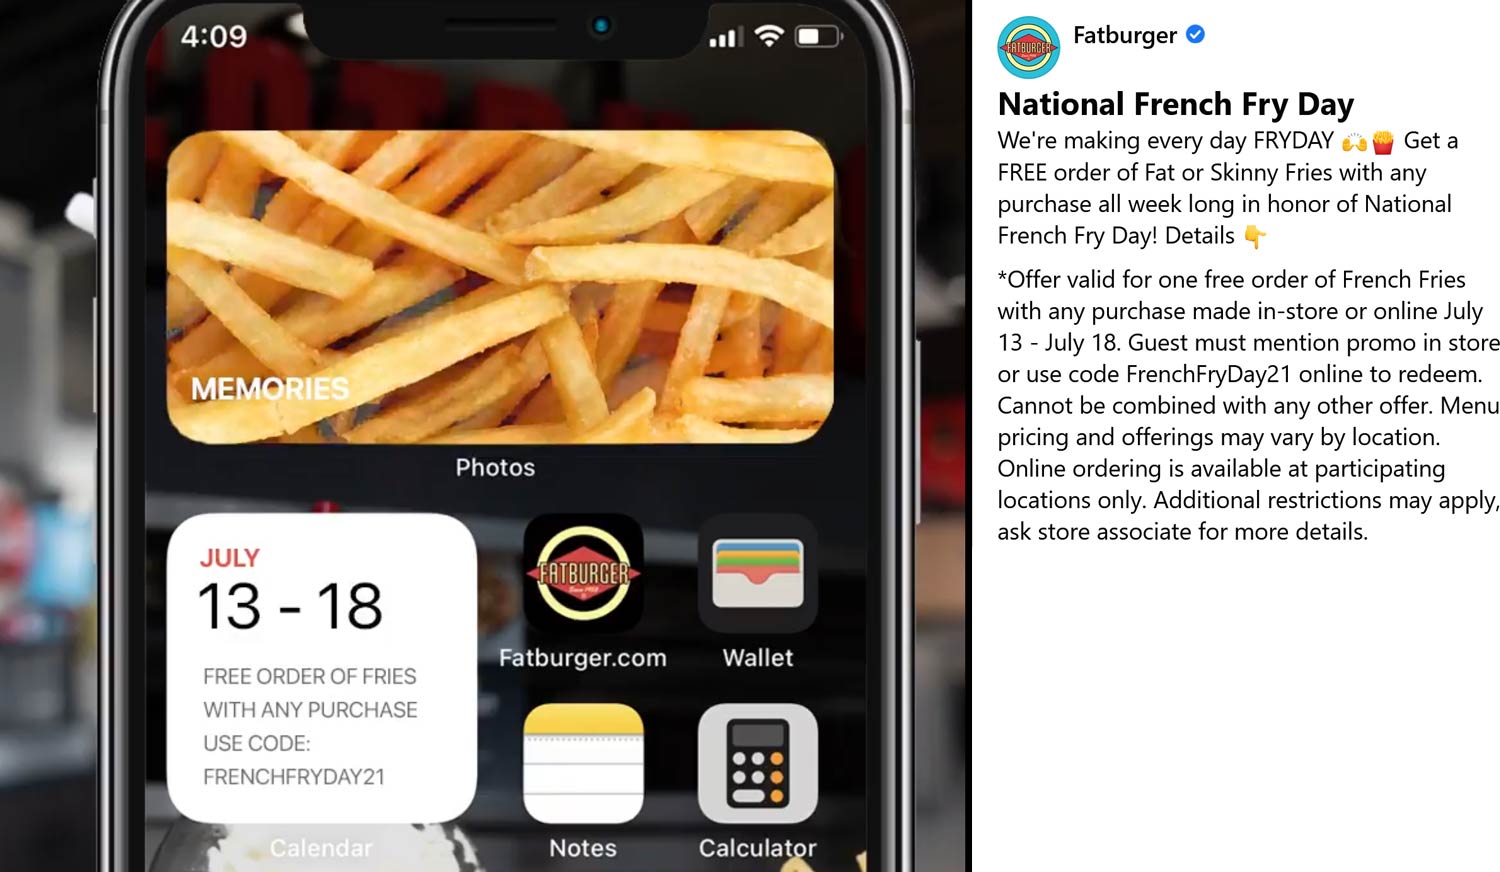 Fatburger restaurants Coupon  Free fries all week at Fatburger restaurants via promo code FrenchFryDay21 #fatburger 